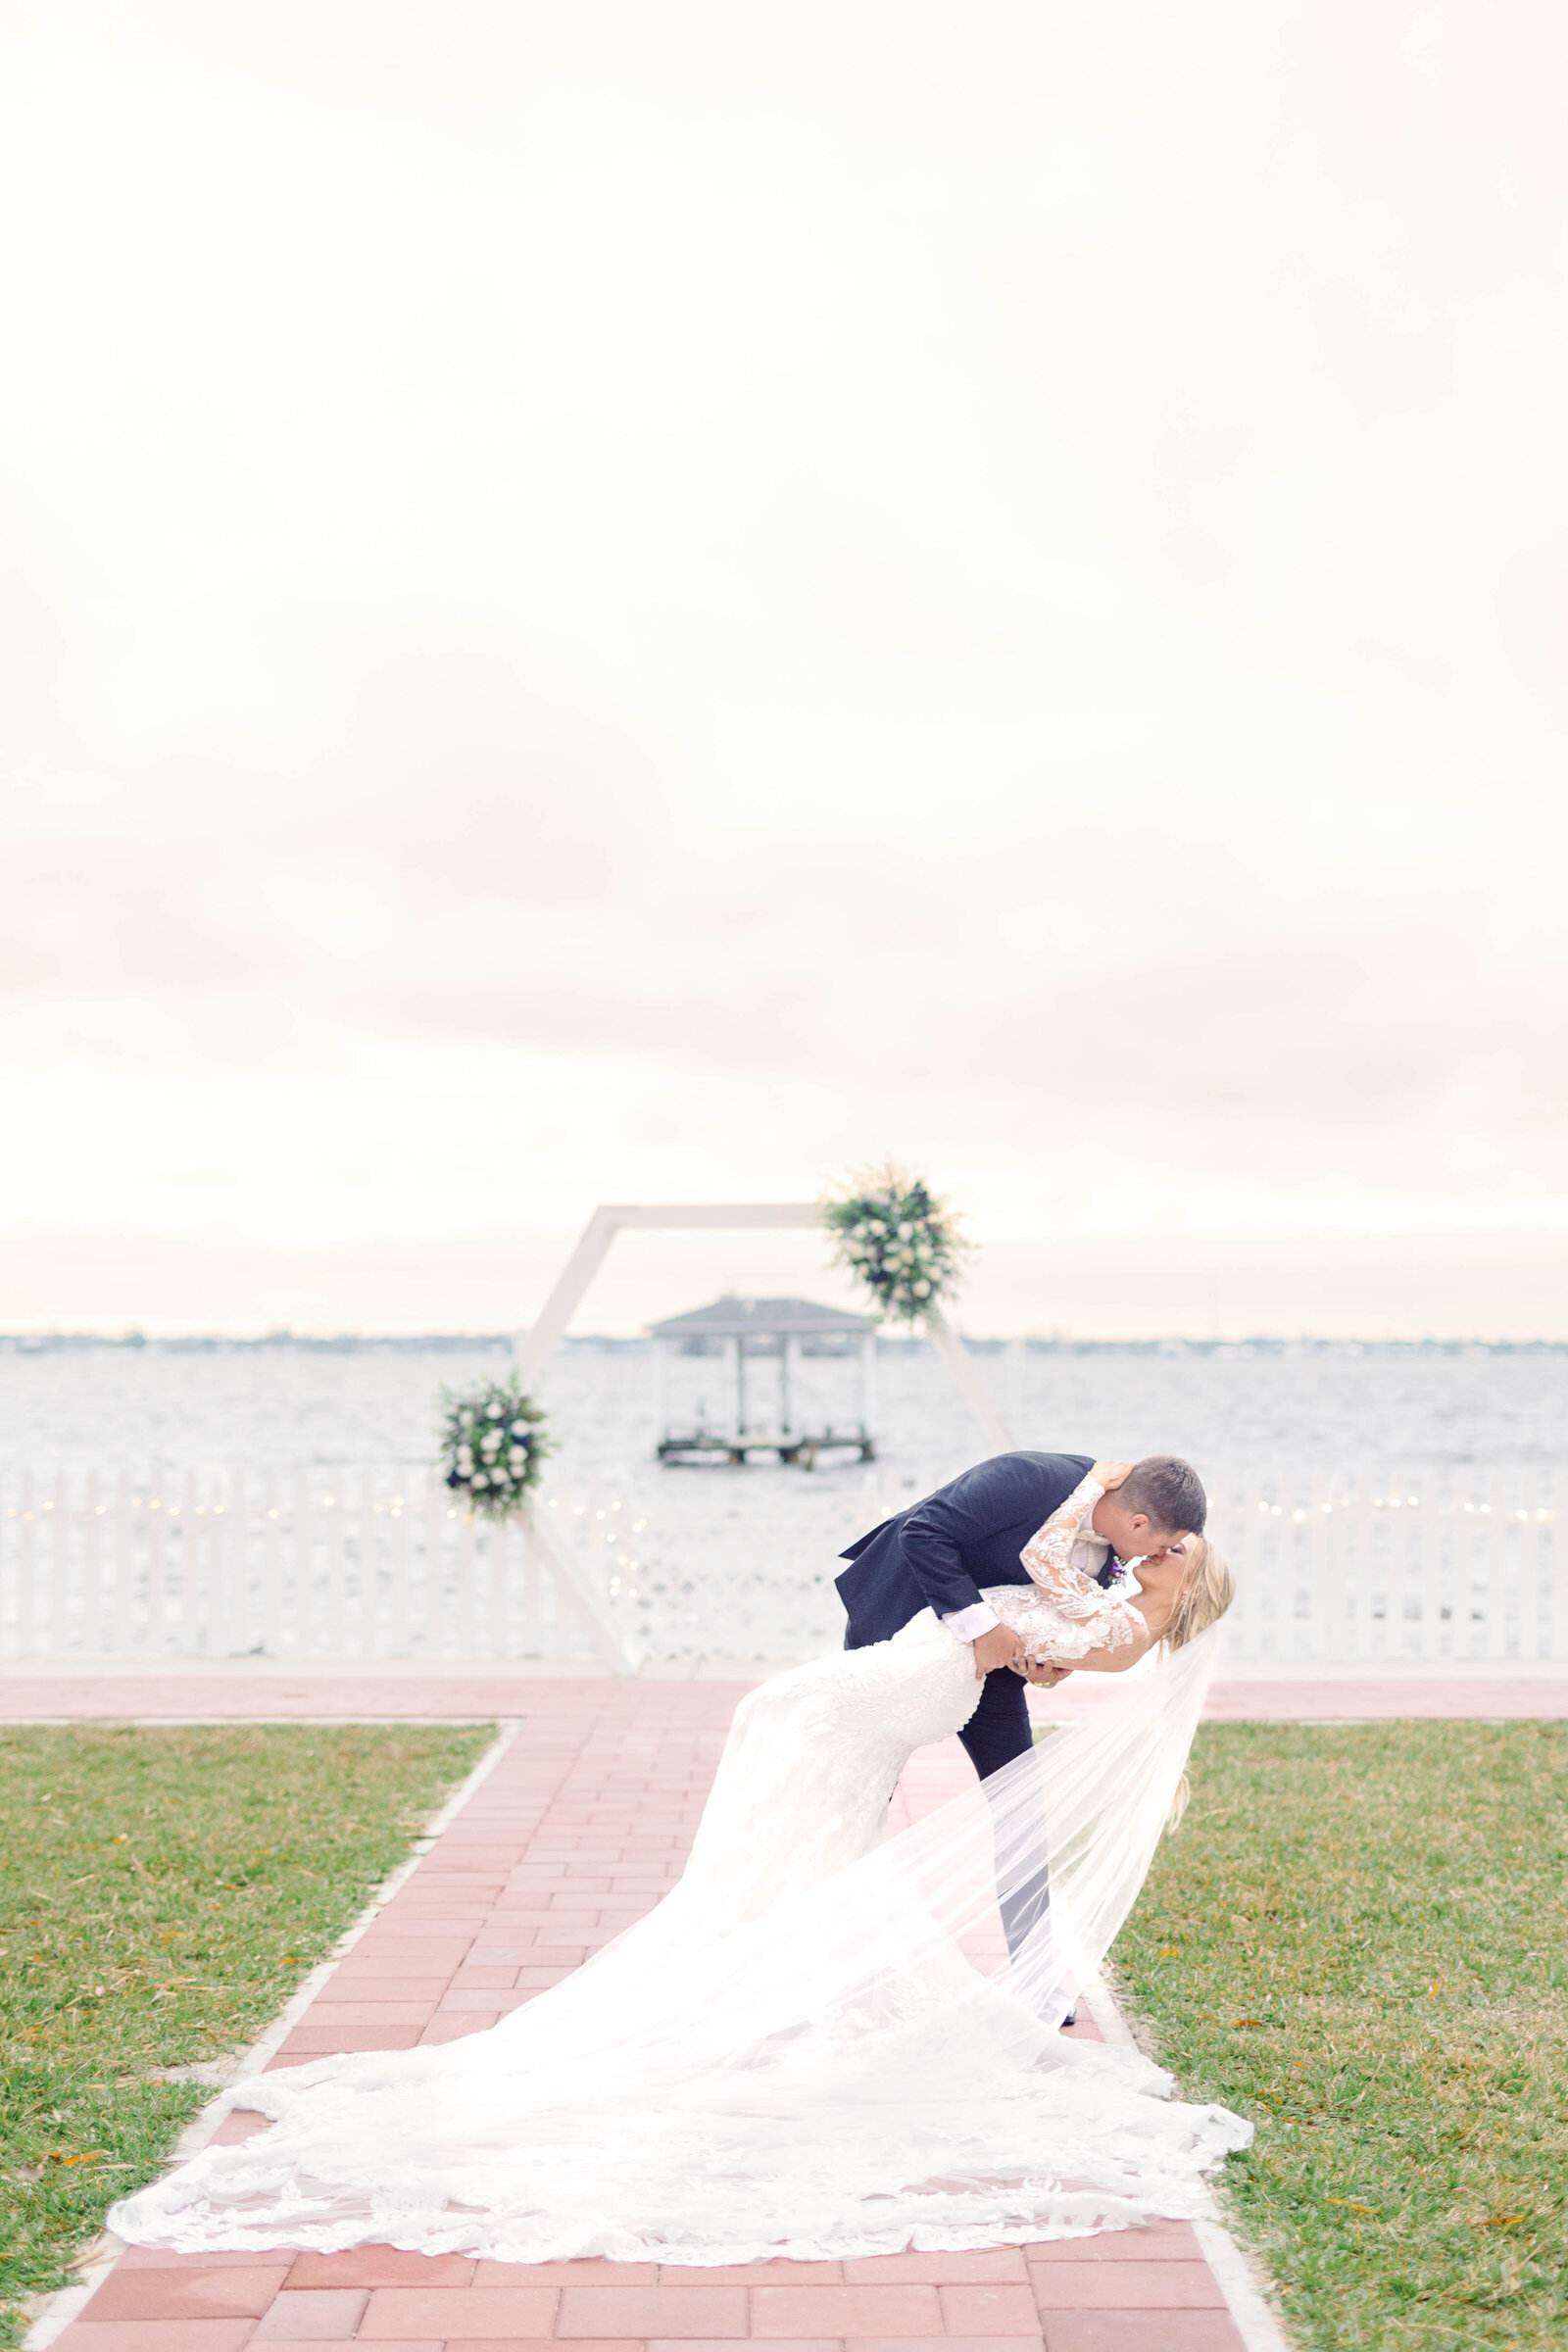 Justin & Cassidy - The Heitman House - Wedding Portraits - Fort Myers Wedding Photographer-824